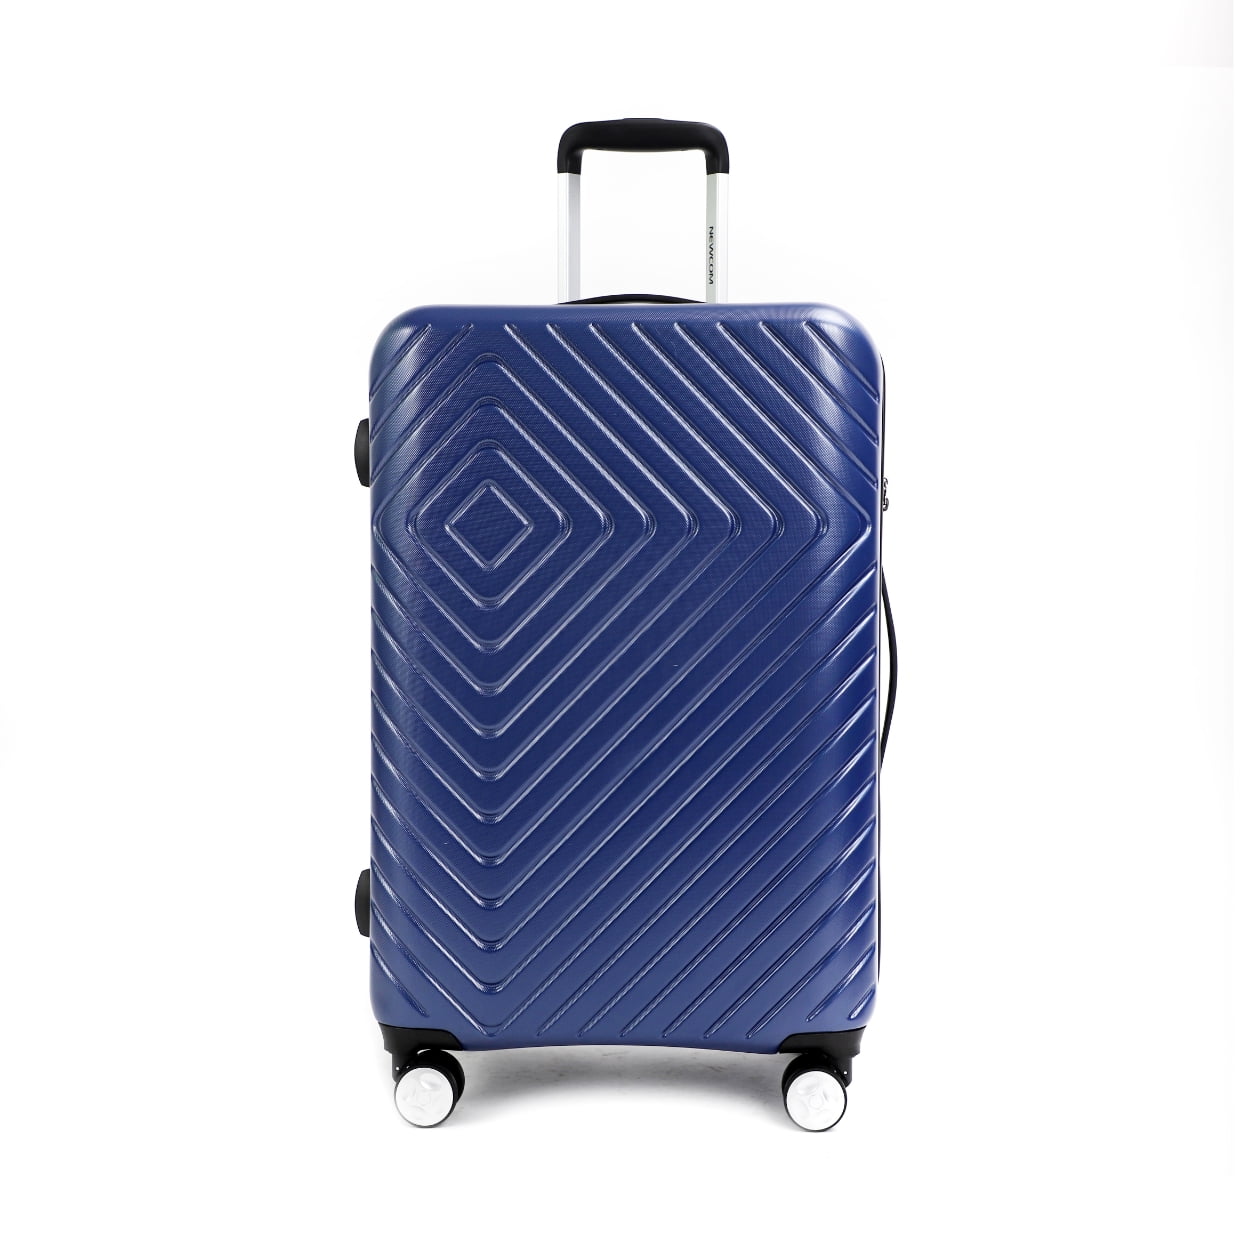 gps smart trolley suitcase abs cabin| Alibaba.com